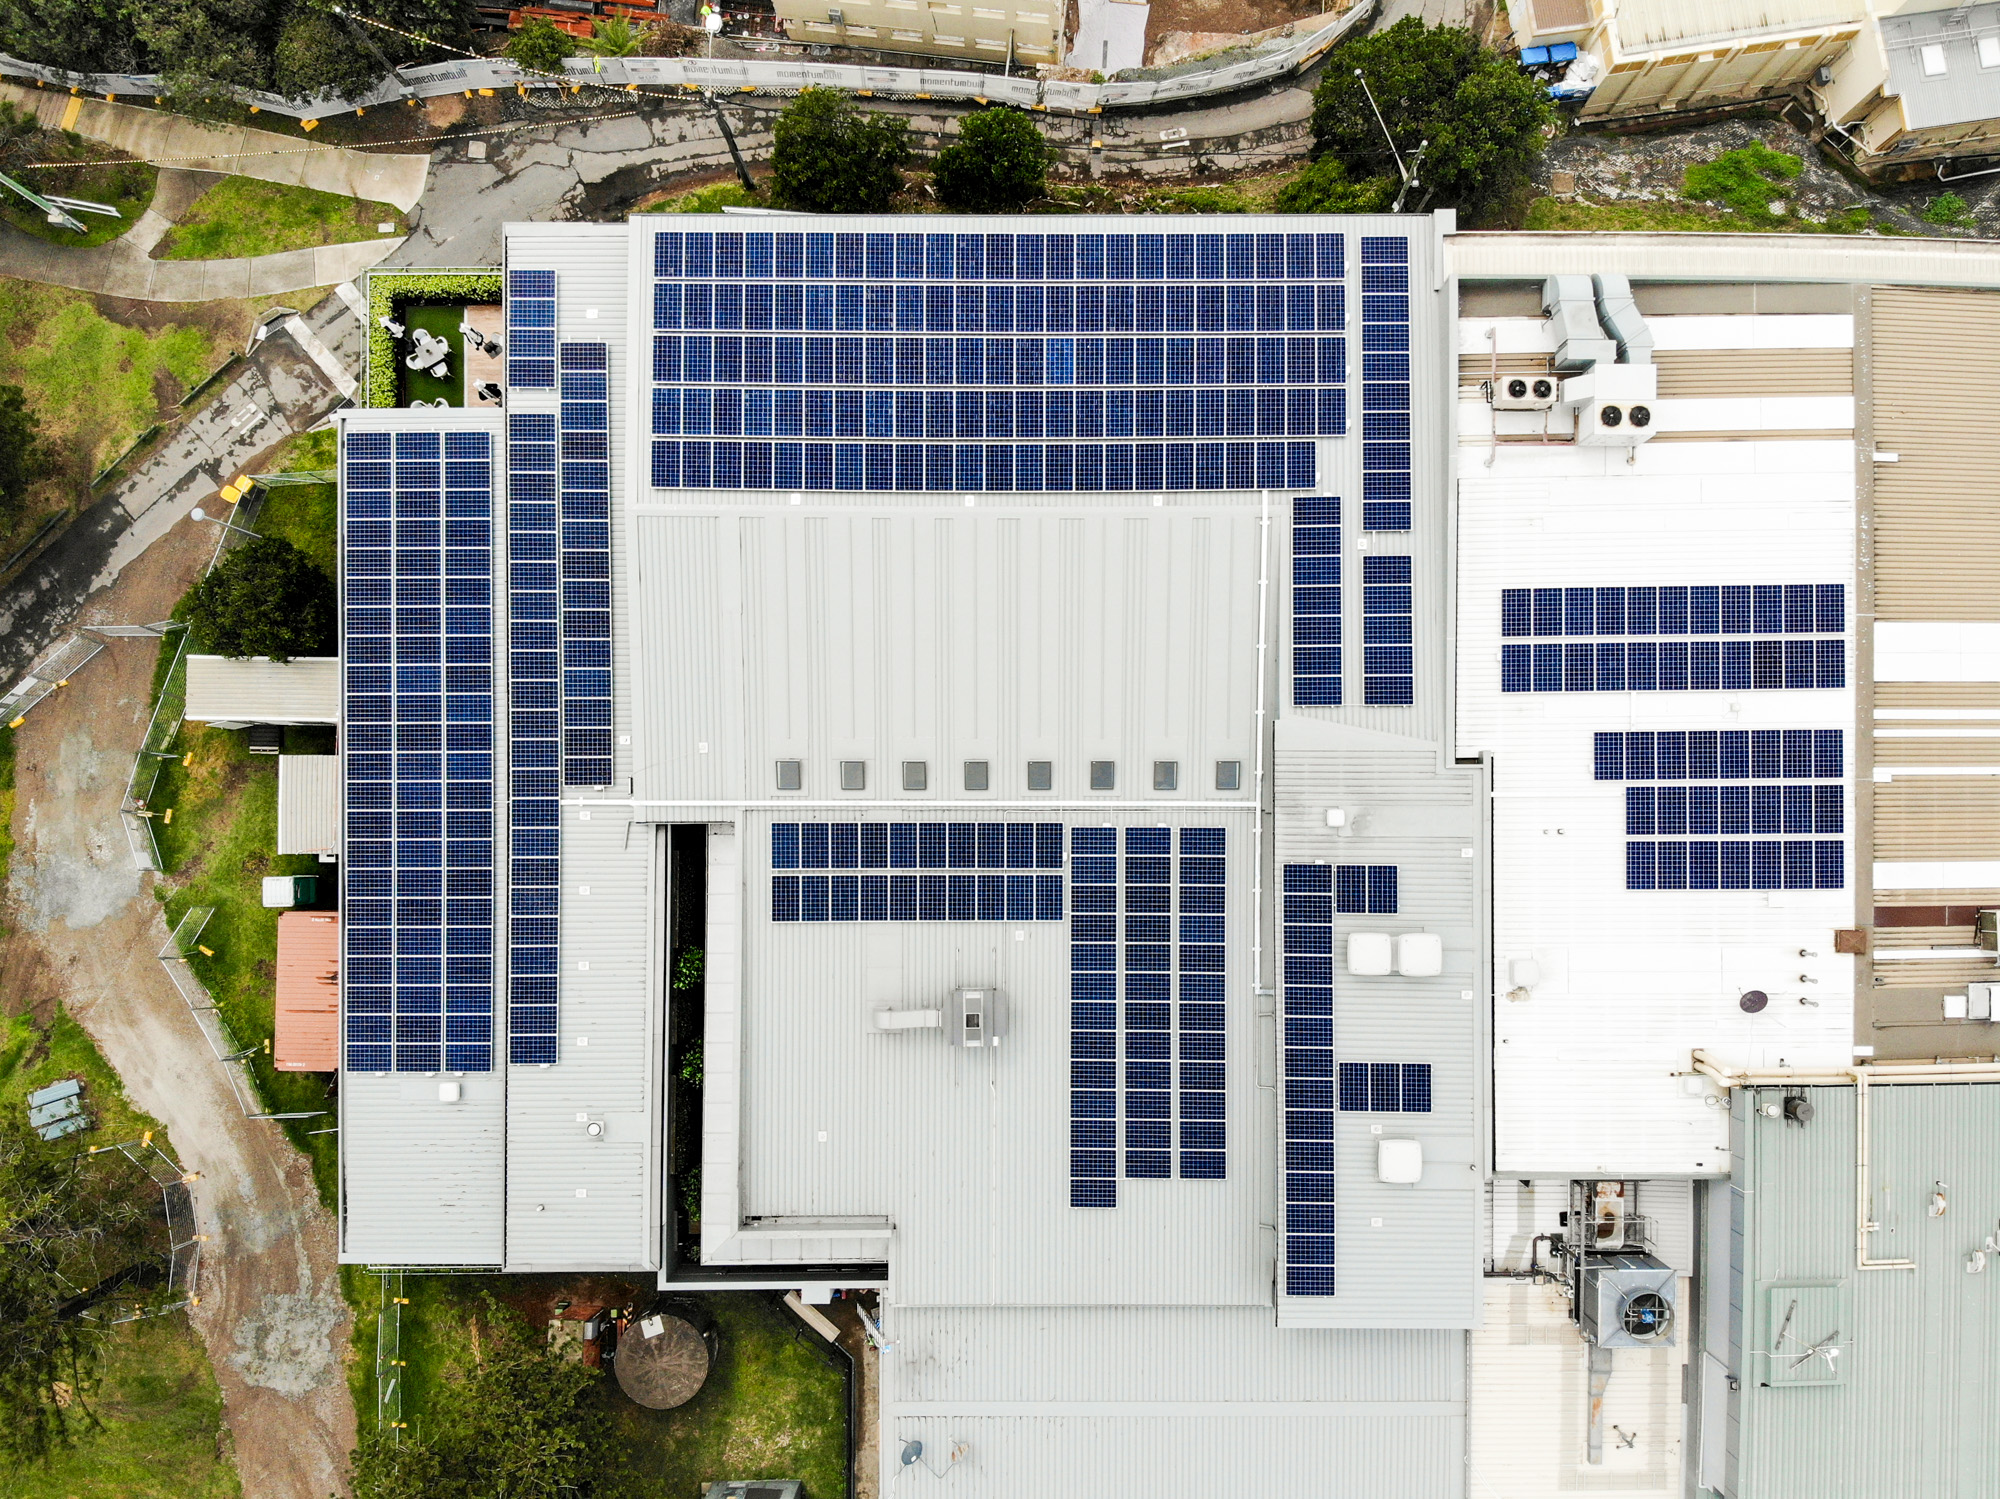 Solarbank 100kW Commercial Solar Install. Cronulla RSL, Sydney